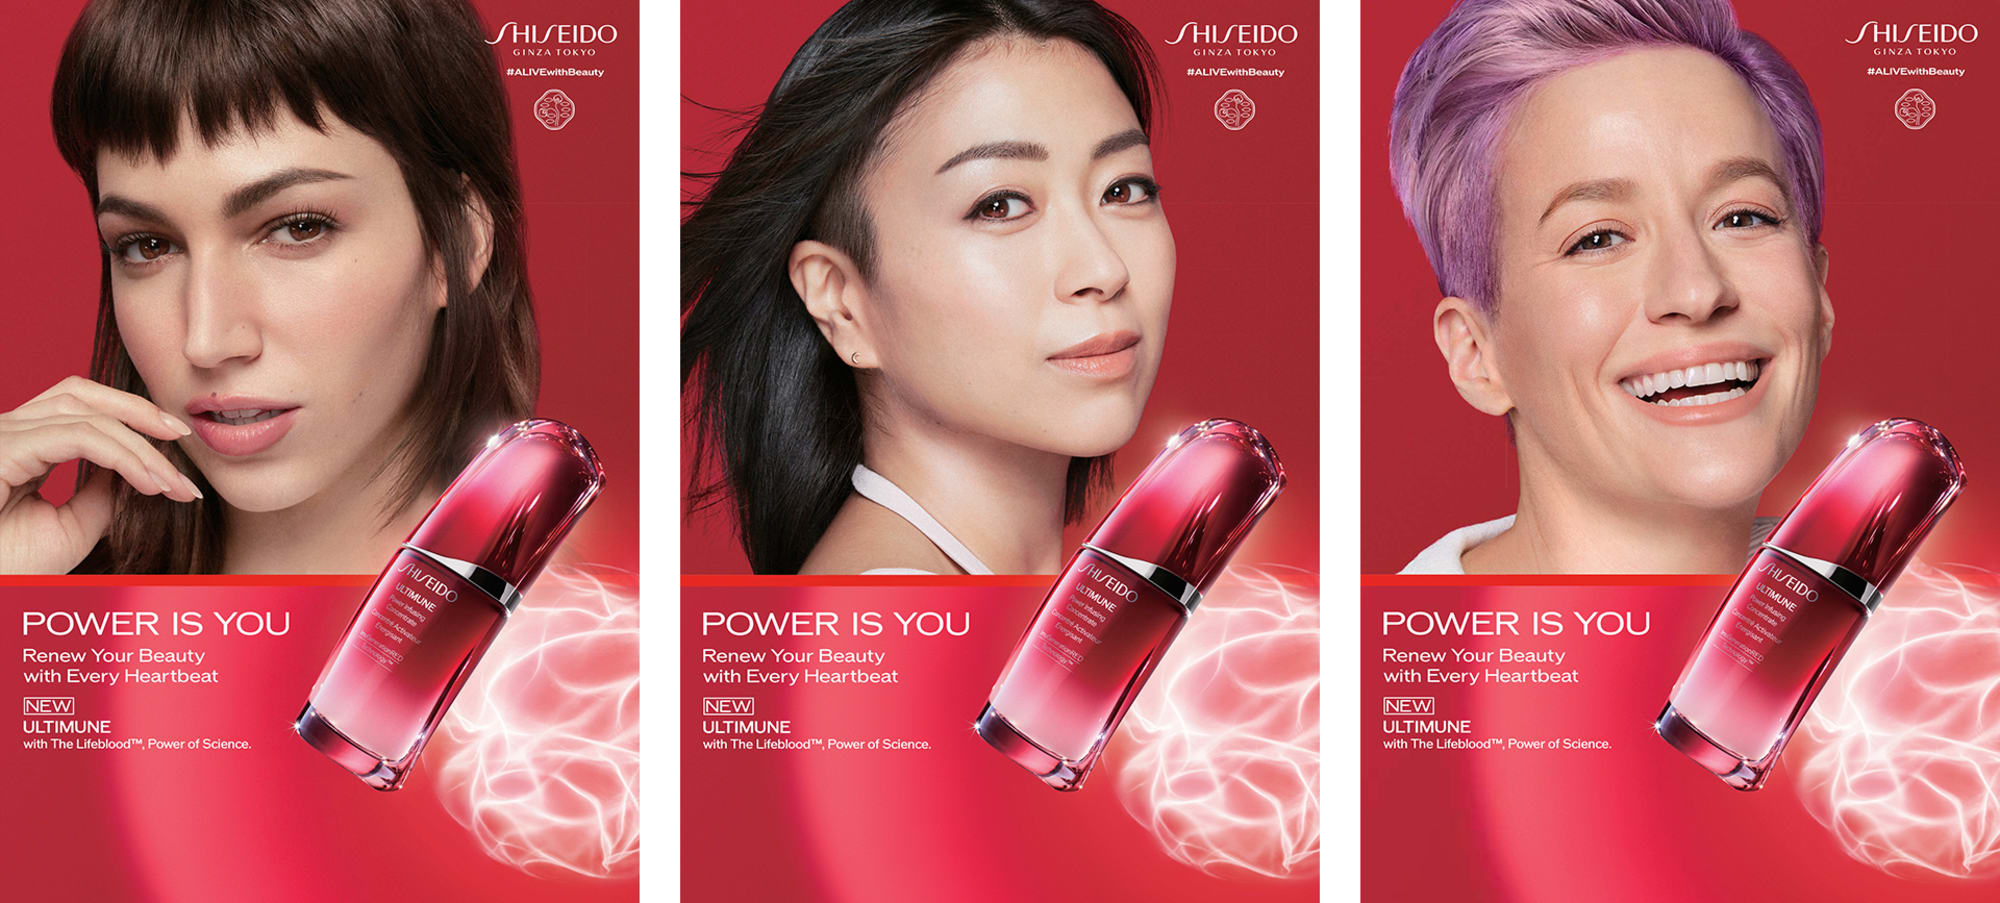 Shiseidoのキャンペーンムービーに宇多田ヒカルらが出演 世界中で人気の美容液アルティミューン をリニューアル